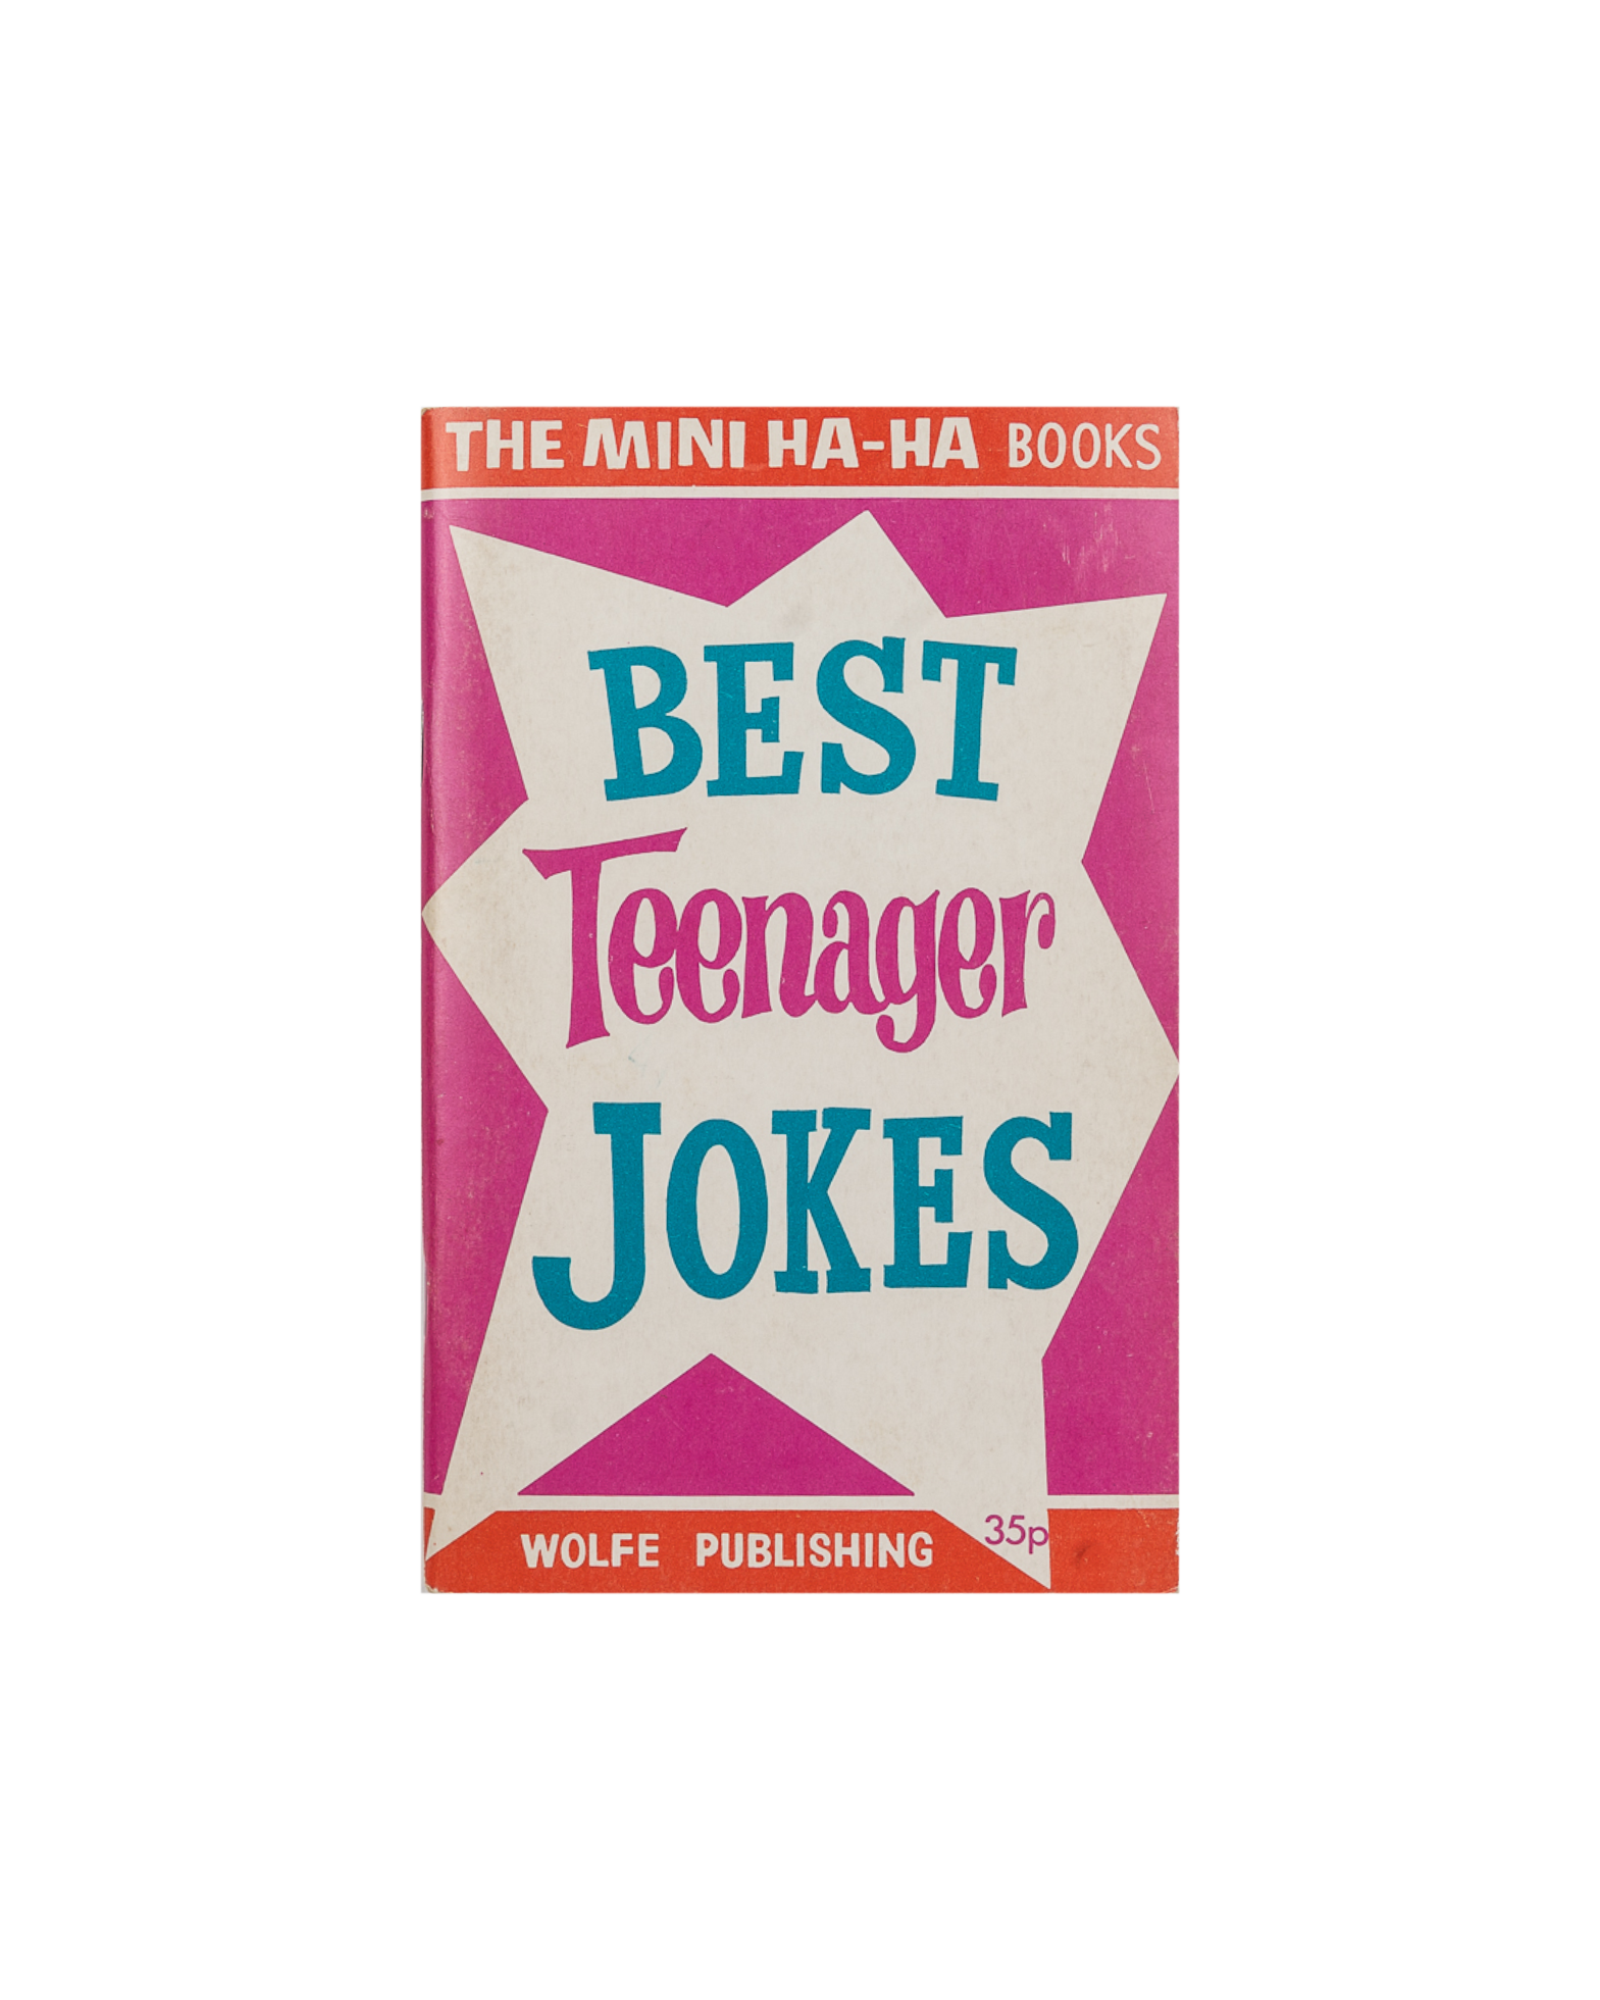 Classic Paris - Book - The Mini Ha-Ha Books - Best Teenager Books